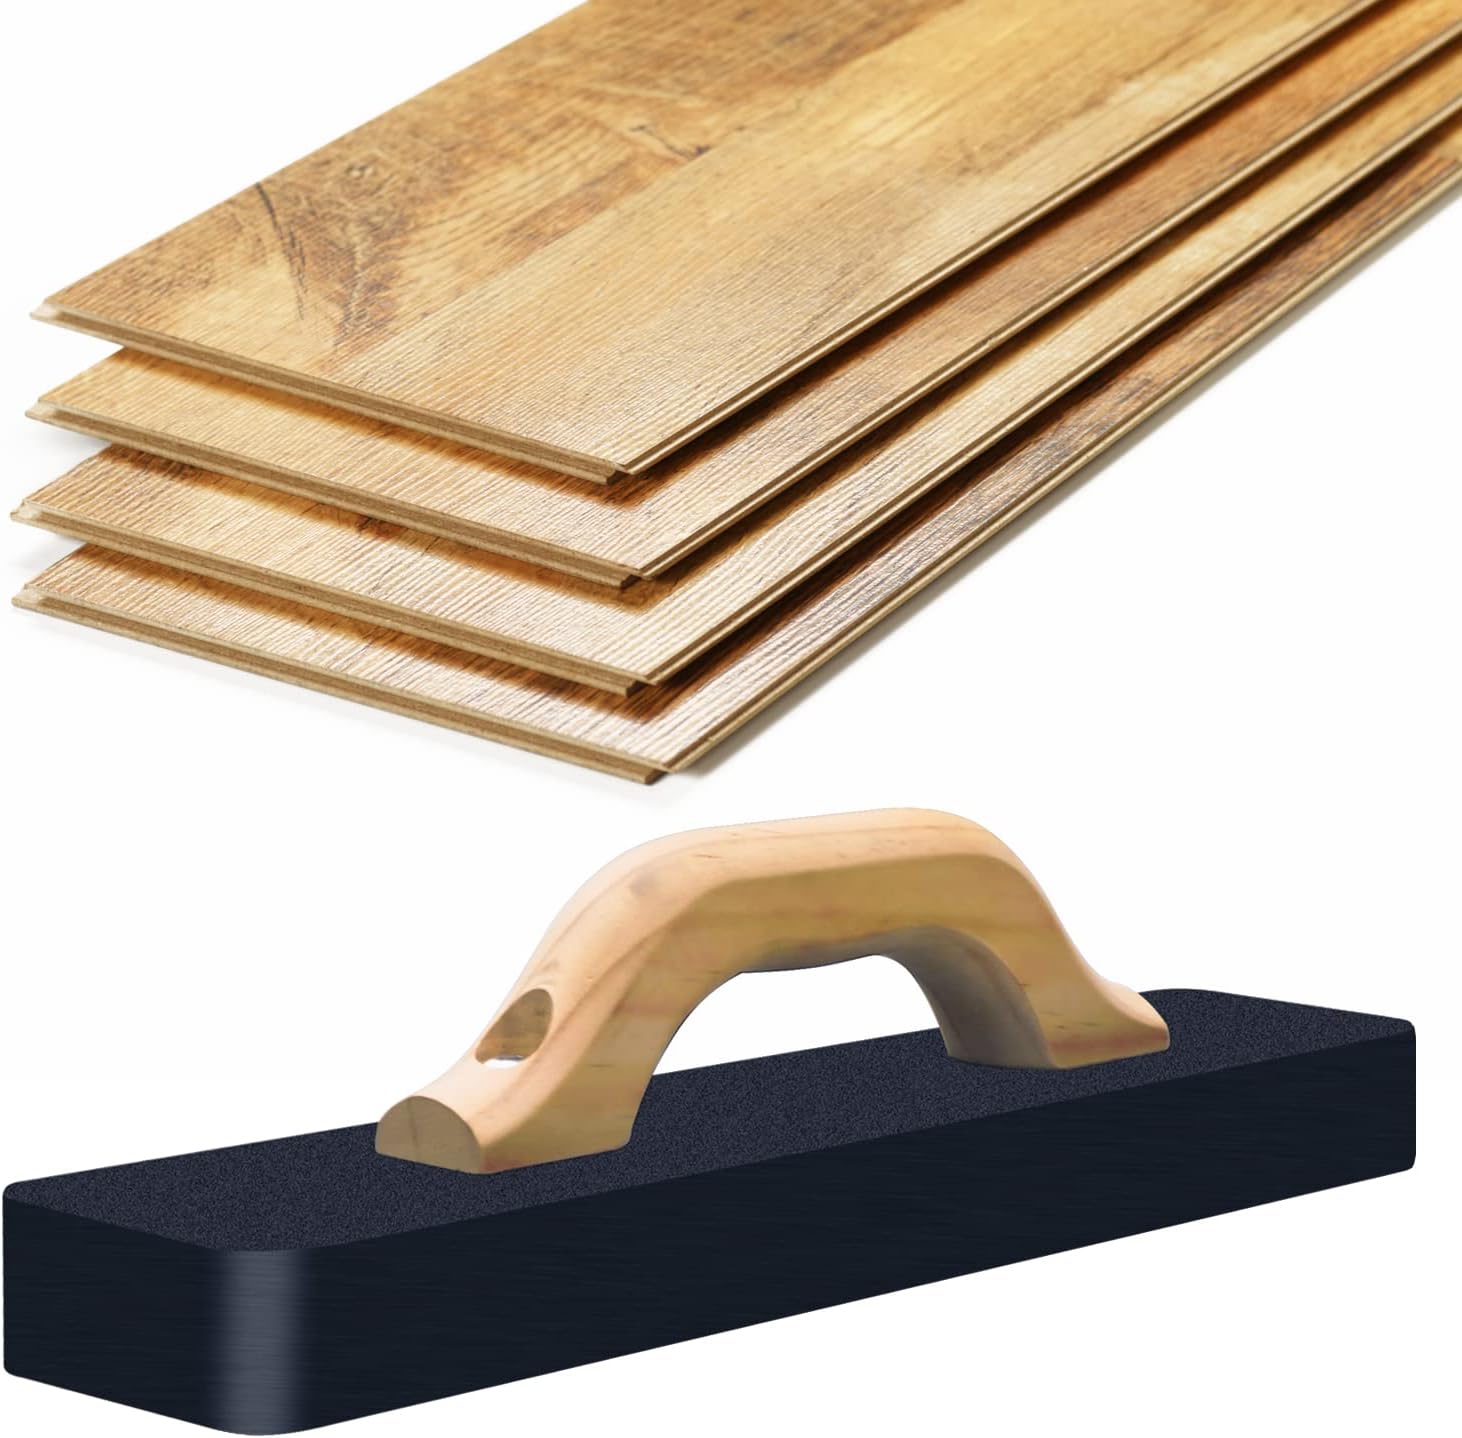 NAACOO Tapping Block, Flooring Tools - Heavy Big Tapping Block for Vinyl Plank Flooring with Big Wood Handle, No Need Hammer - Knock 1